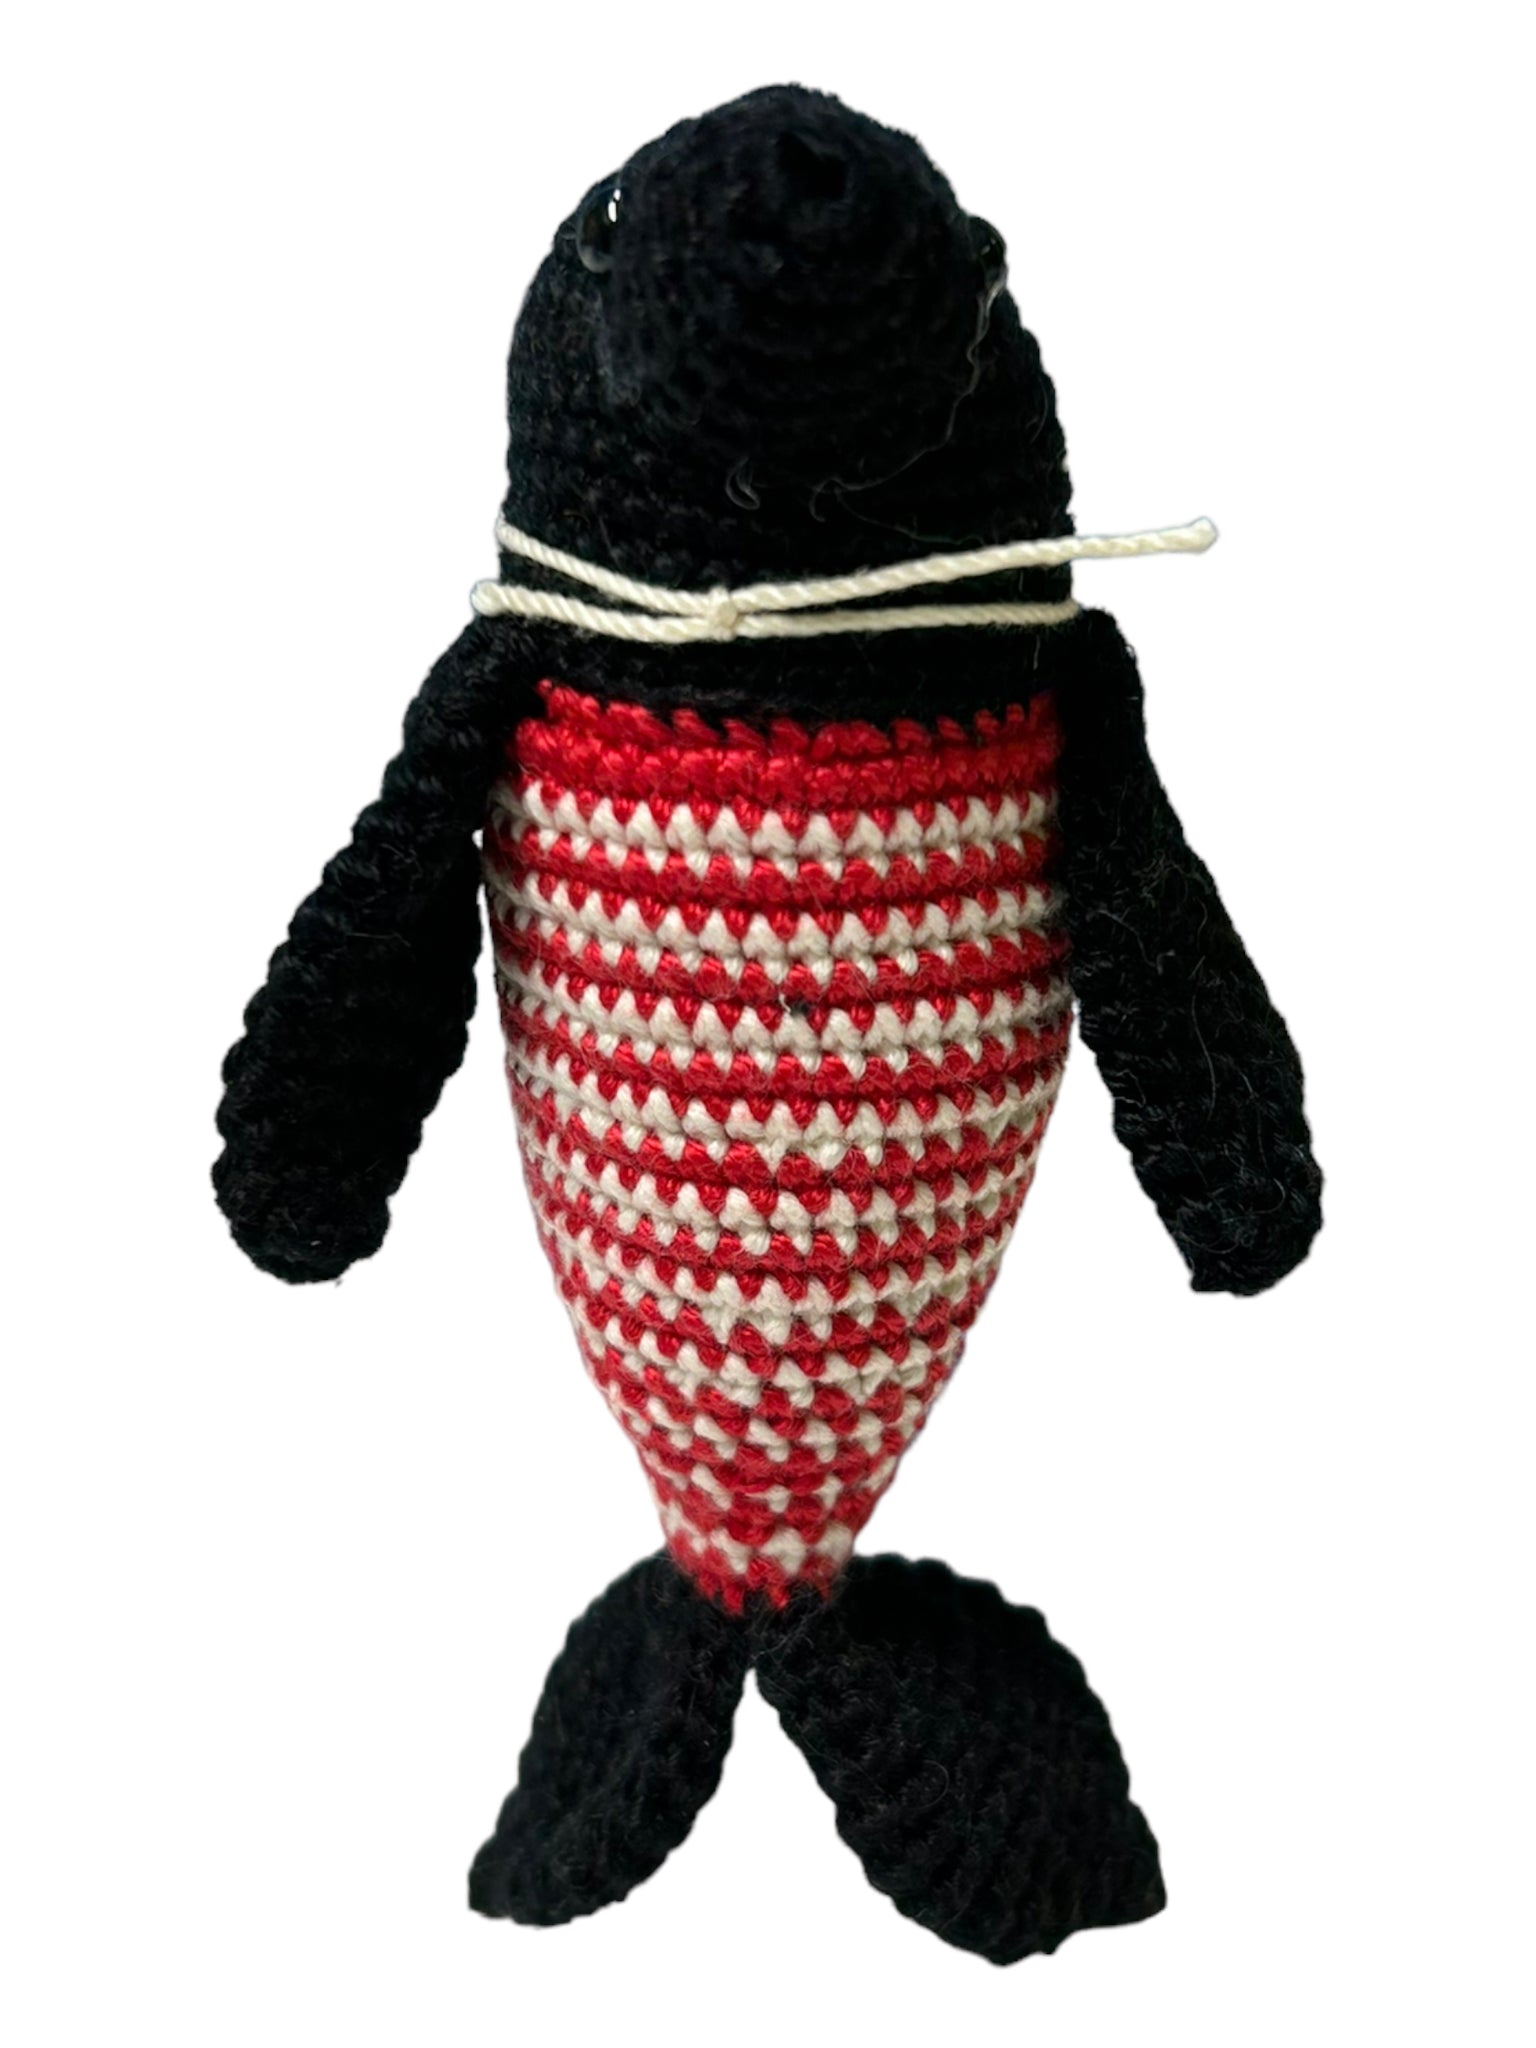 Crocheted Seal